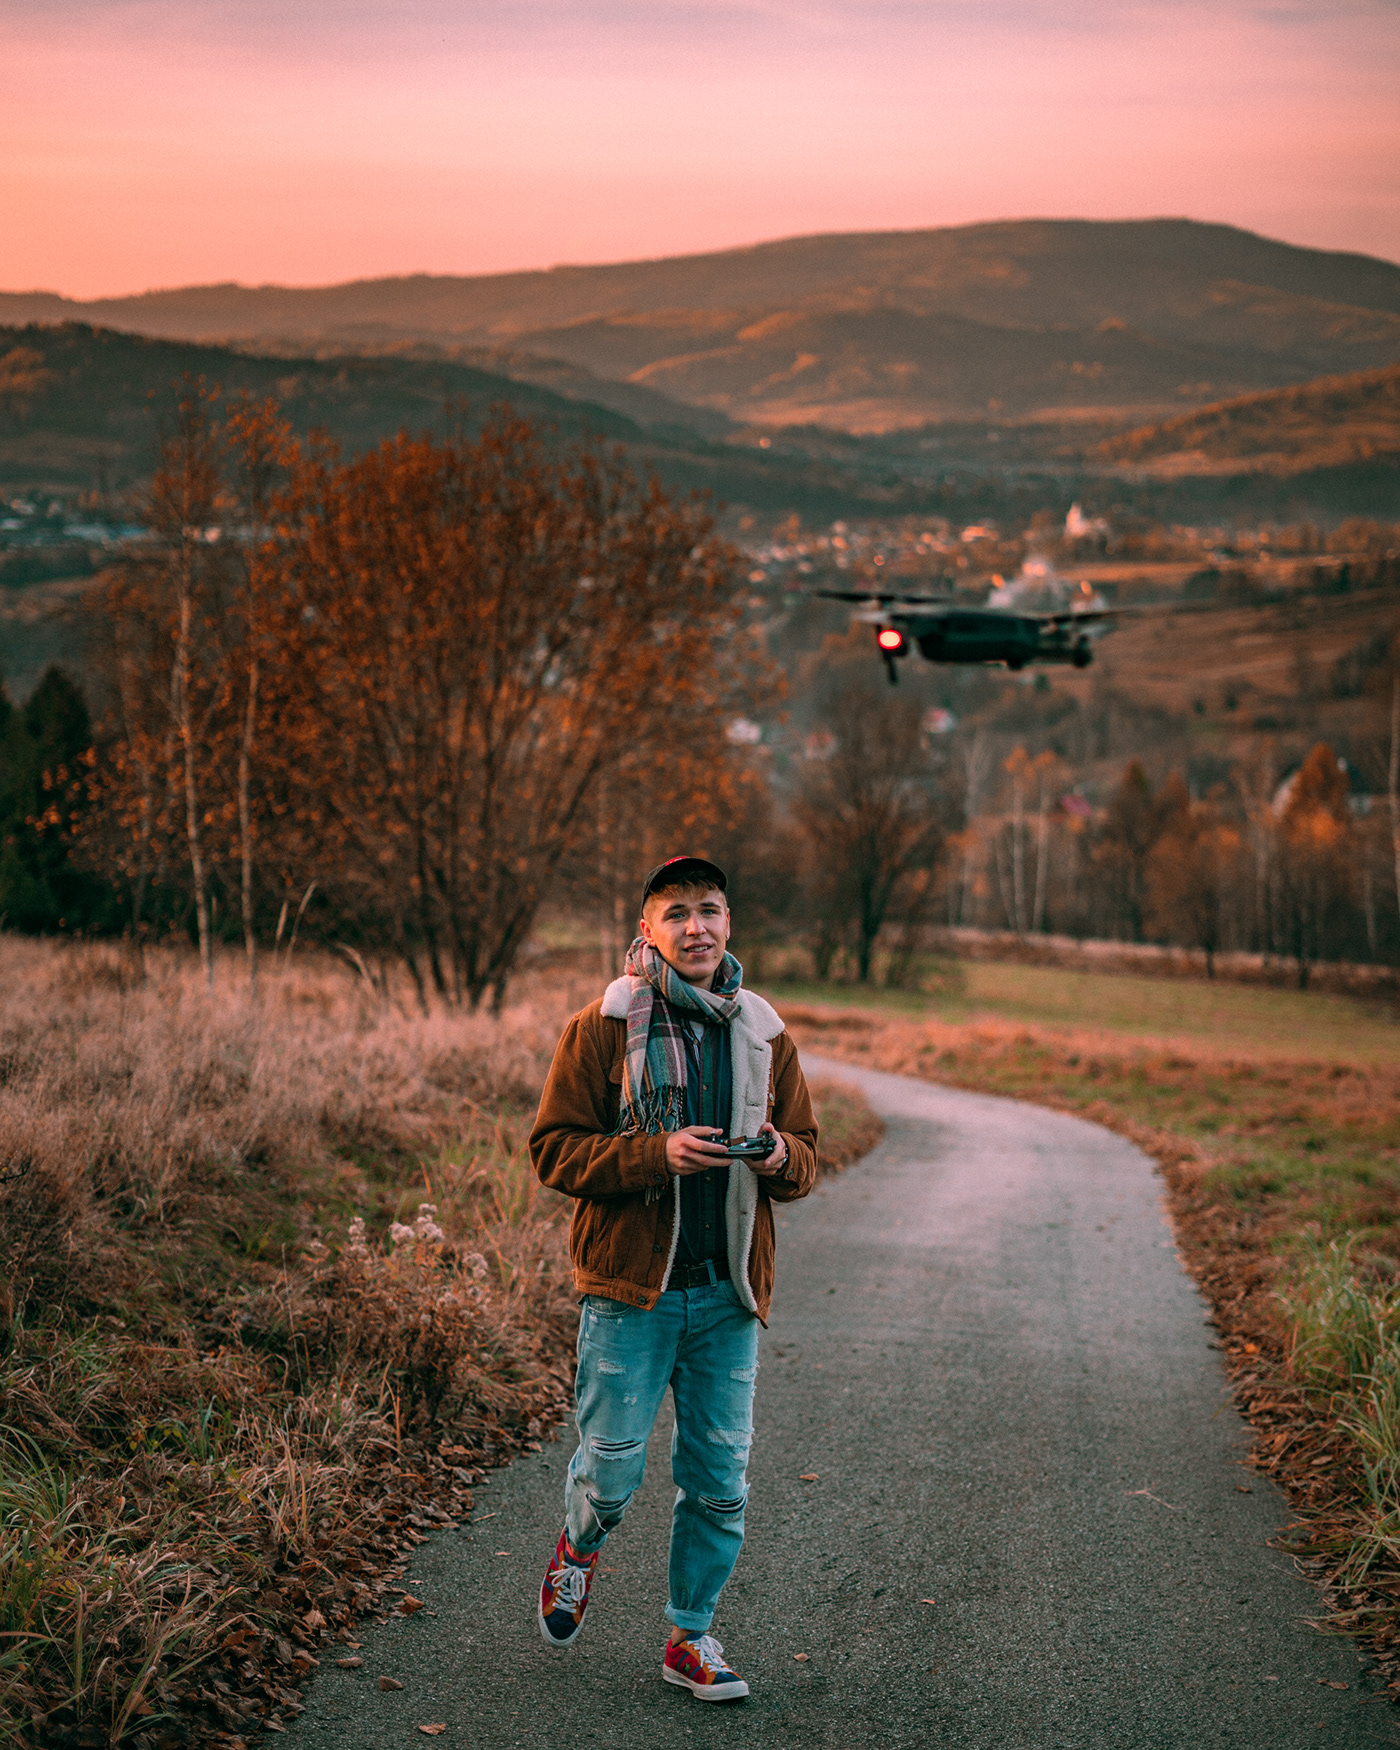 DJI DJI.ARS DJI.POLSKA drony GIMBALE PRODUCS CAMPAIGN